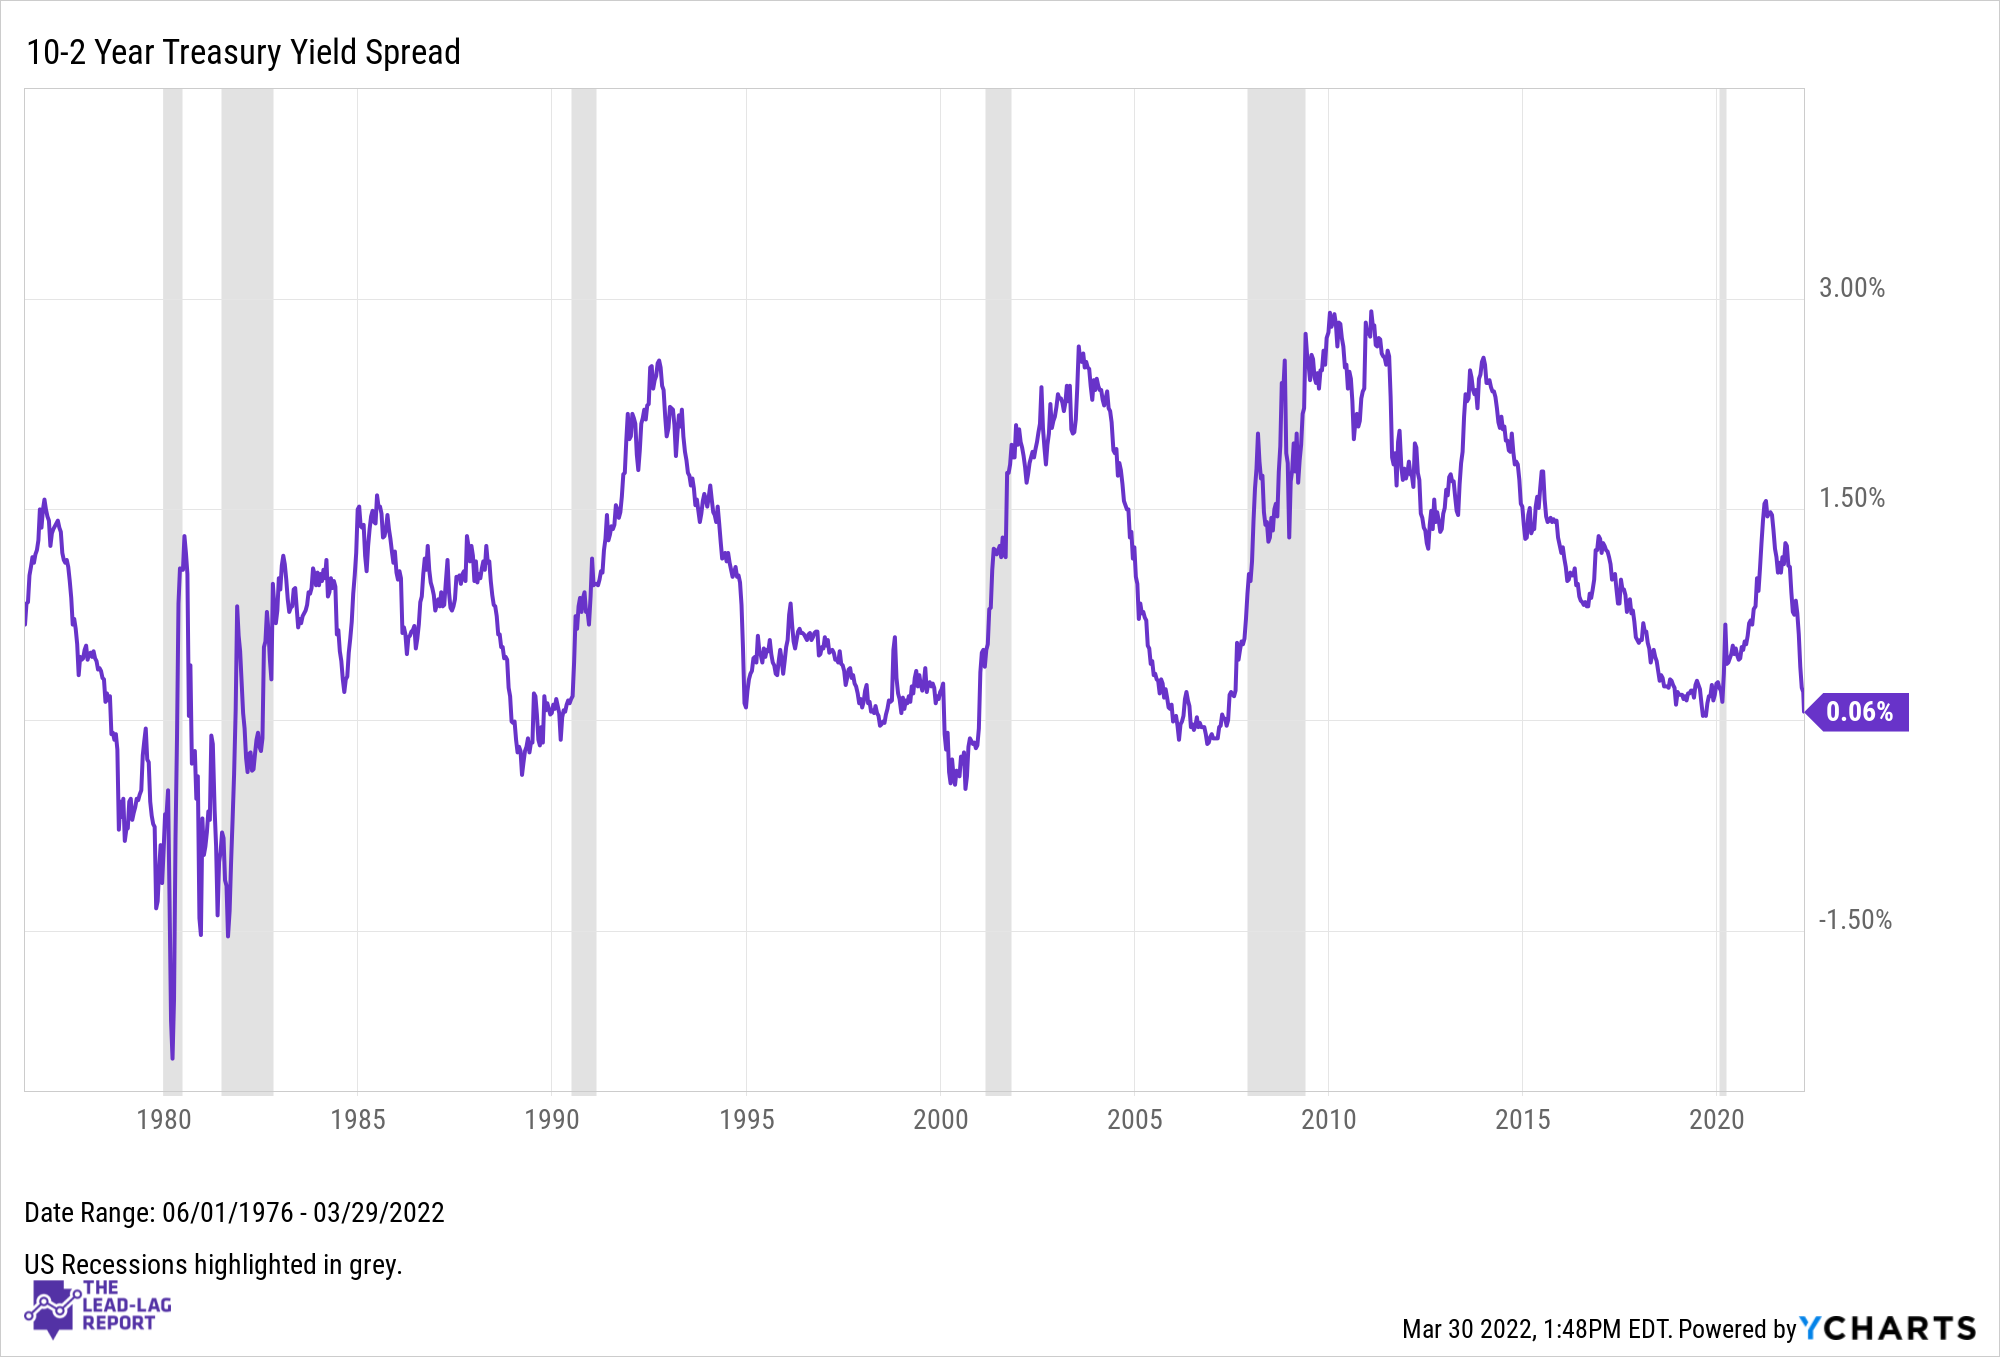 10-2 Year Treasury Yield Spread since 1980